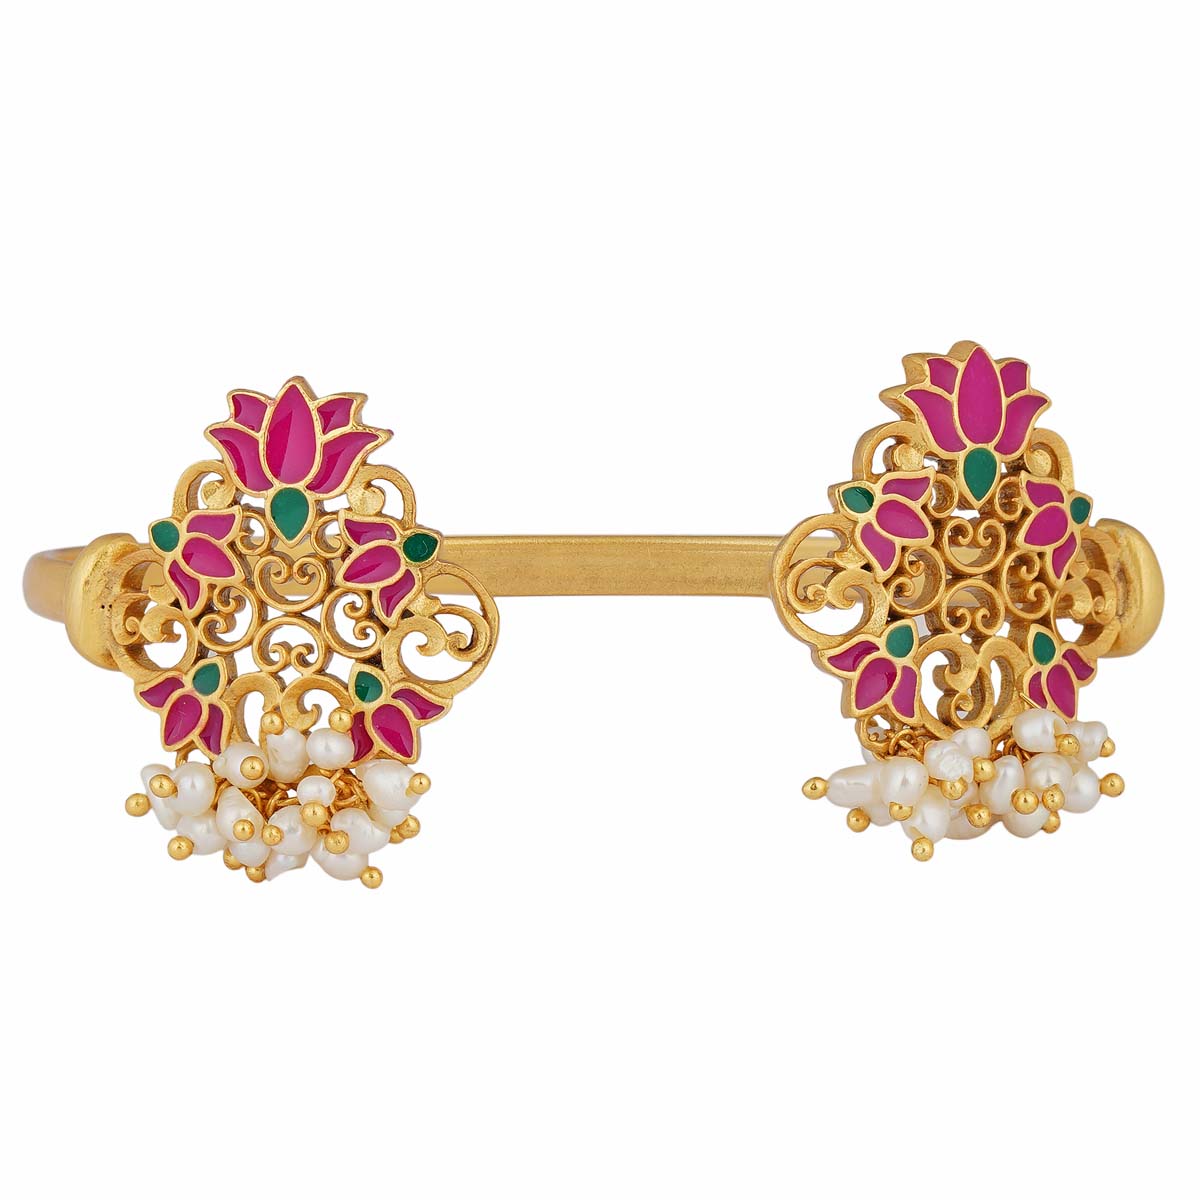 Lotus Dream Choker Necklace & Earrings Set